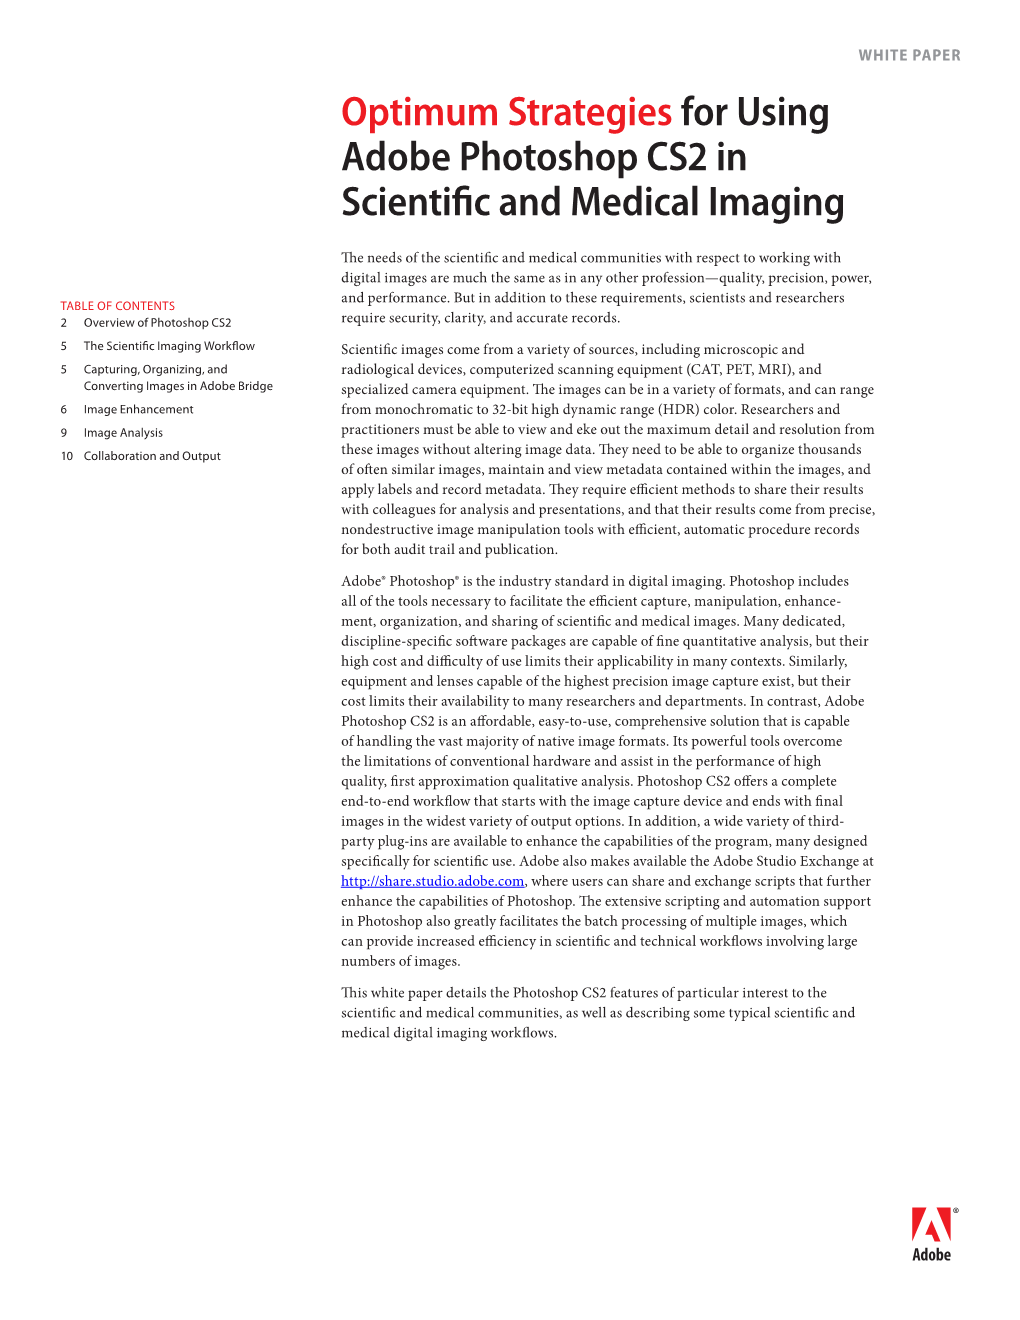 Optimum Strategies for Using Adobe Photoshop CS2 in Scientific and Medical Imaging